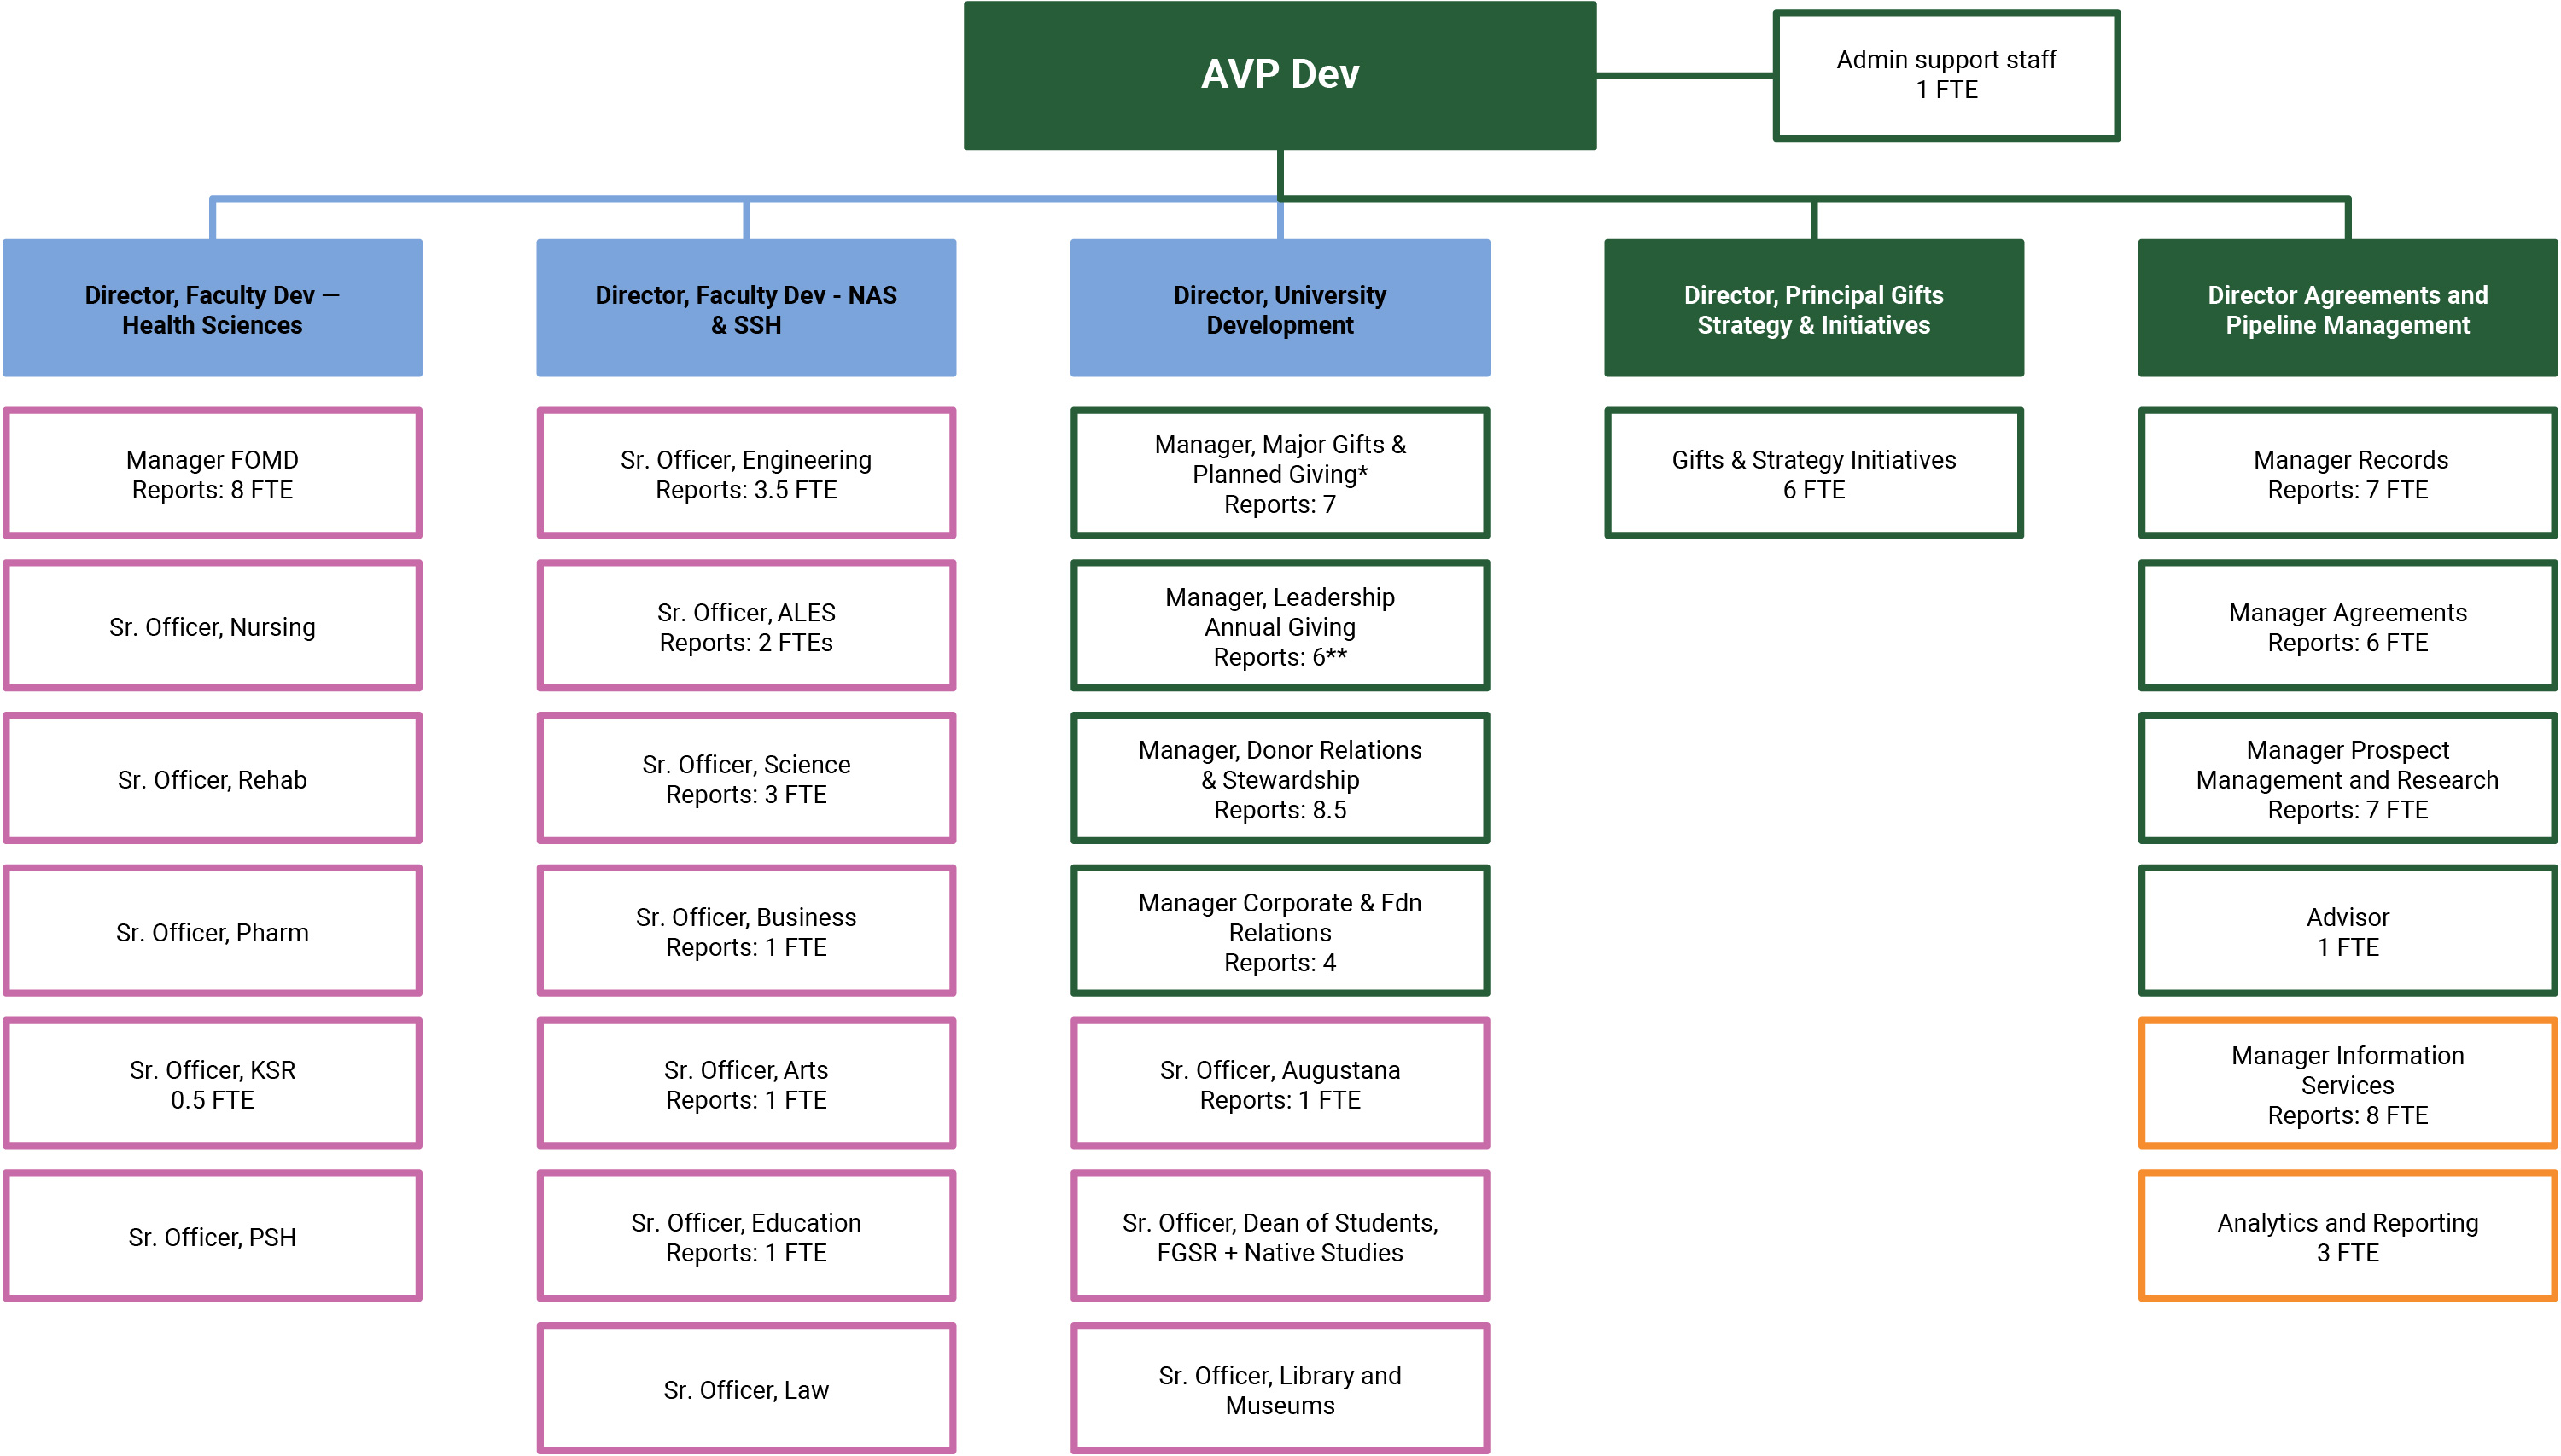 Structure for the AVP Development unit